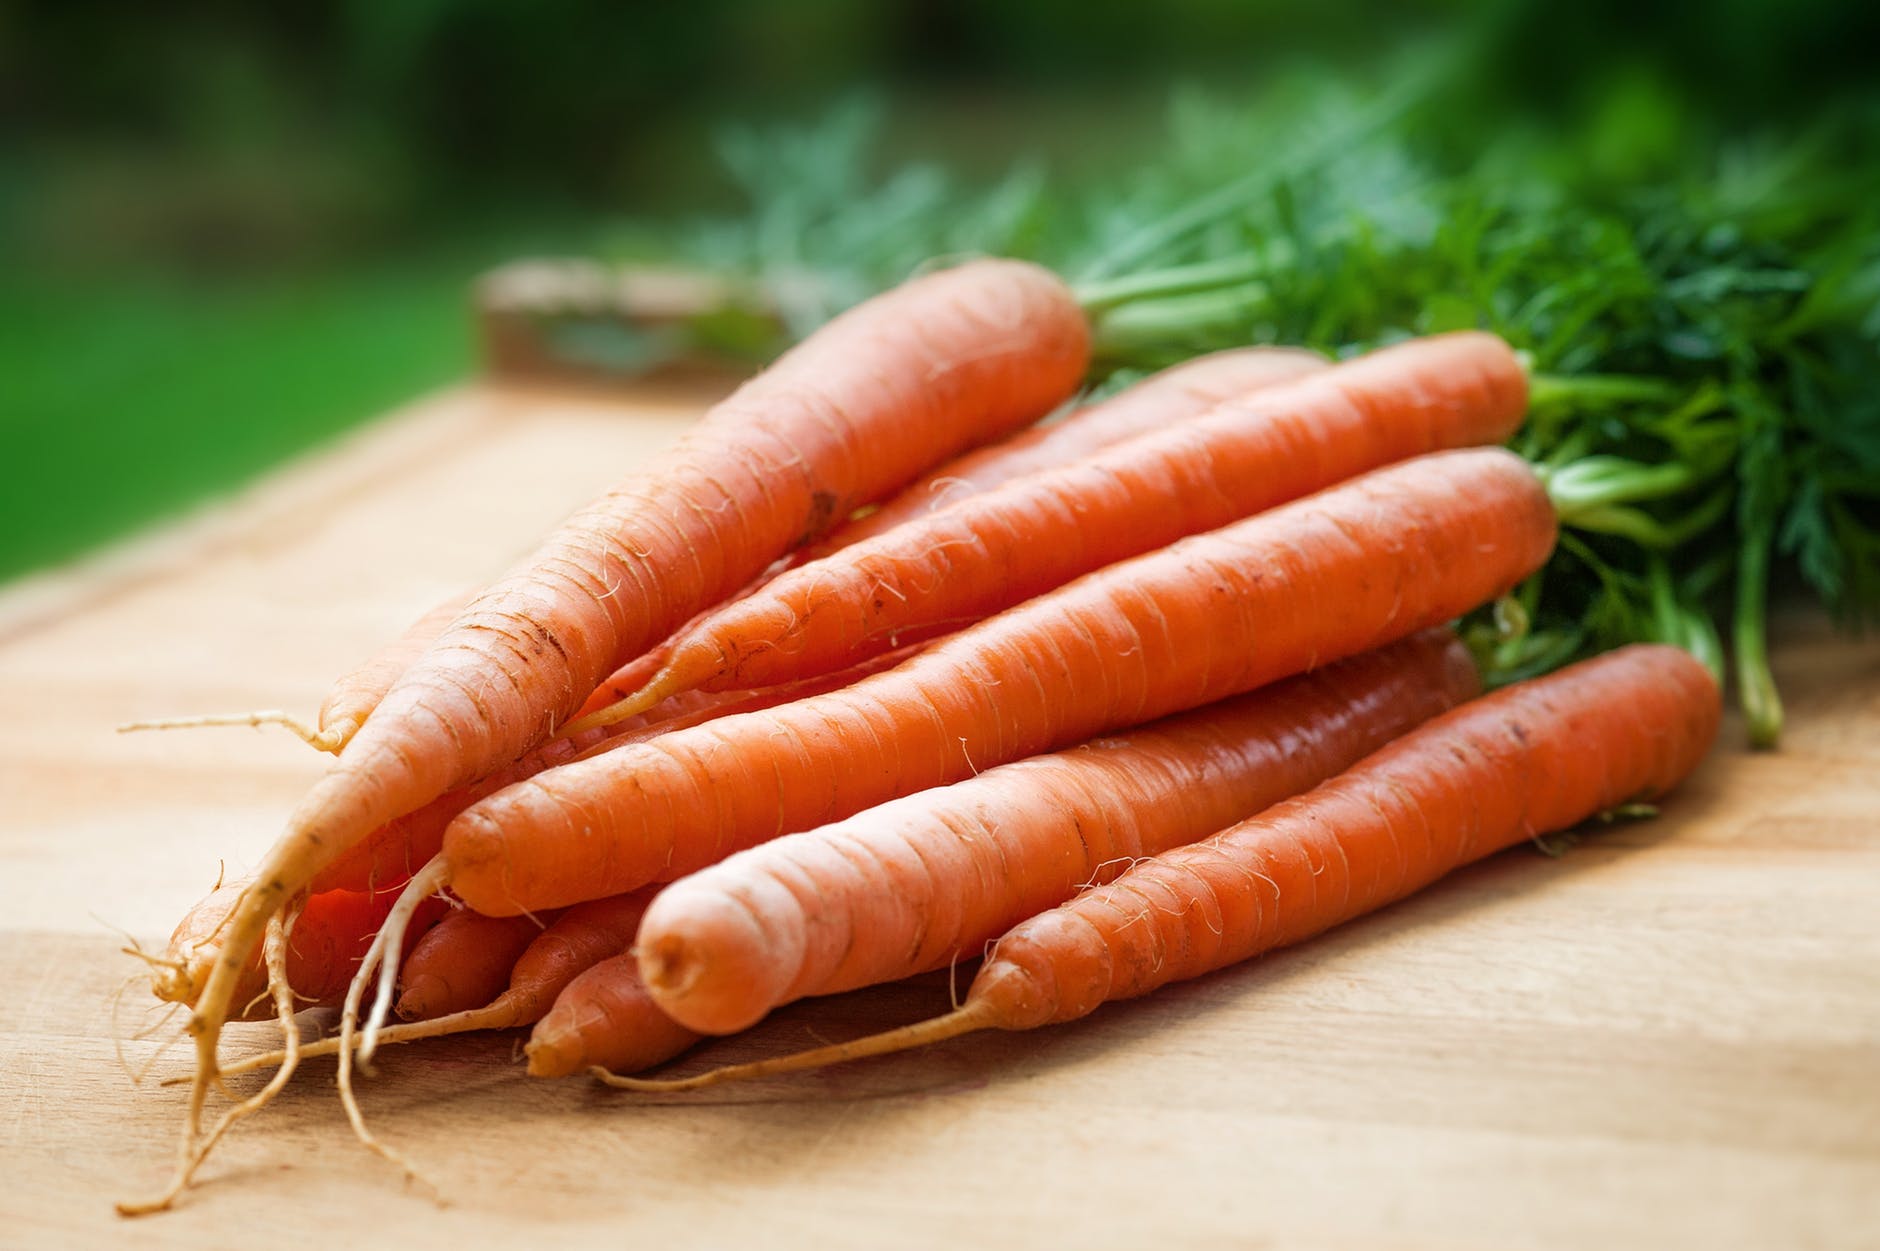 Carrot = แครอท